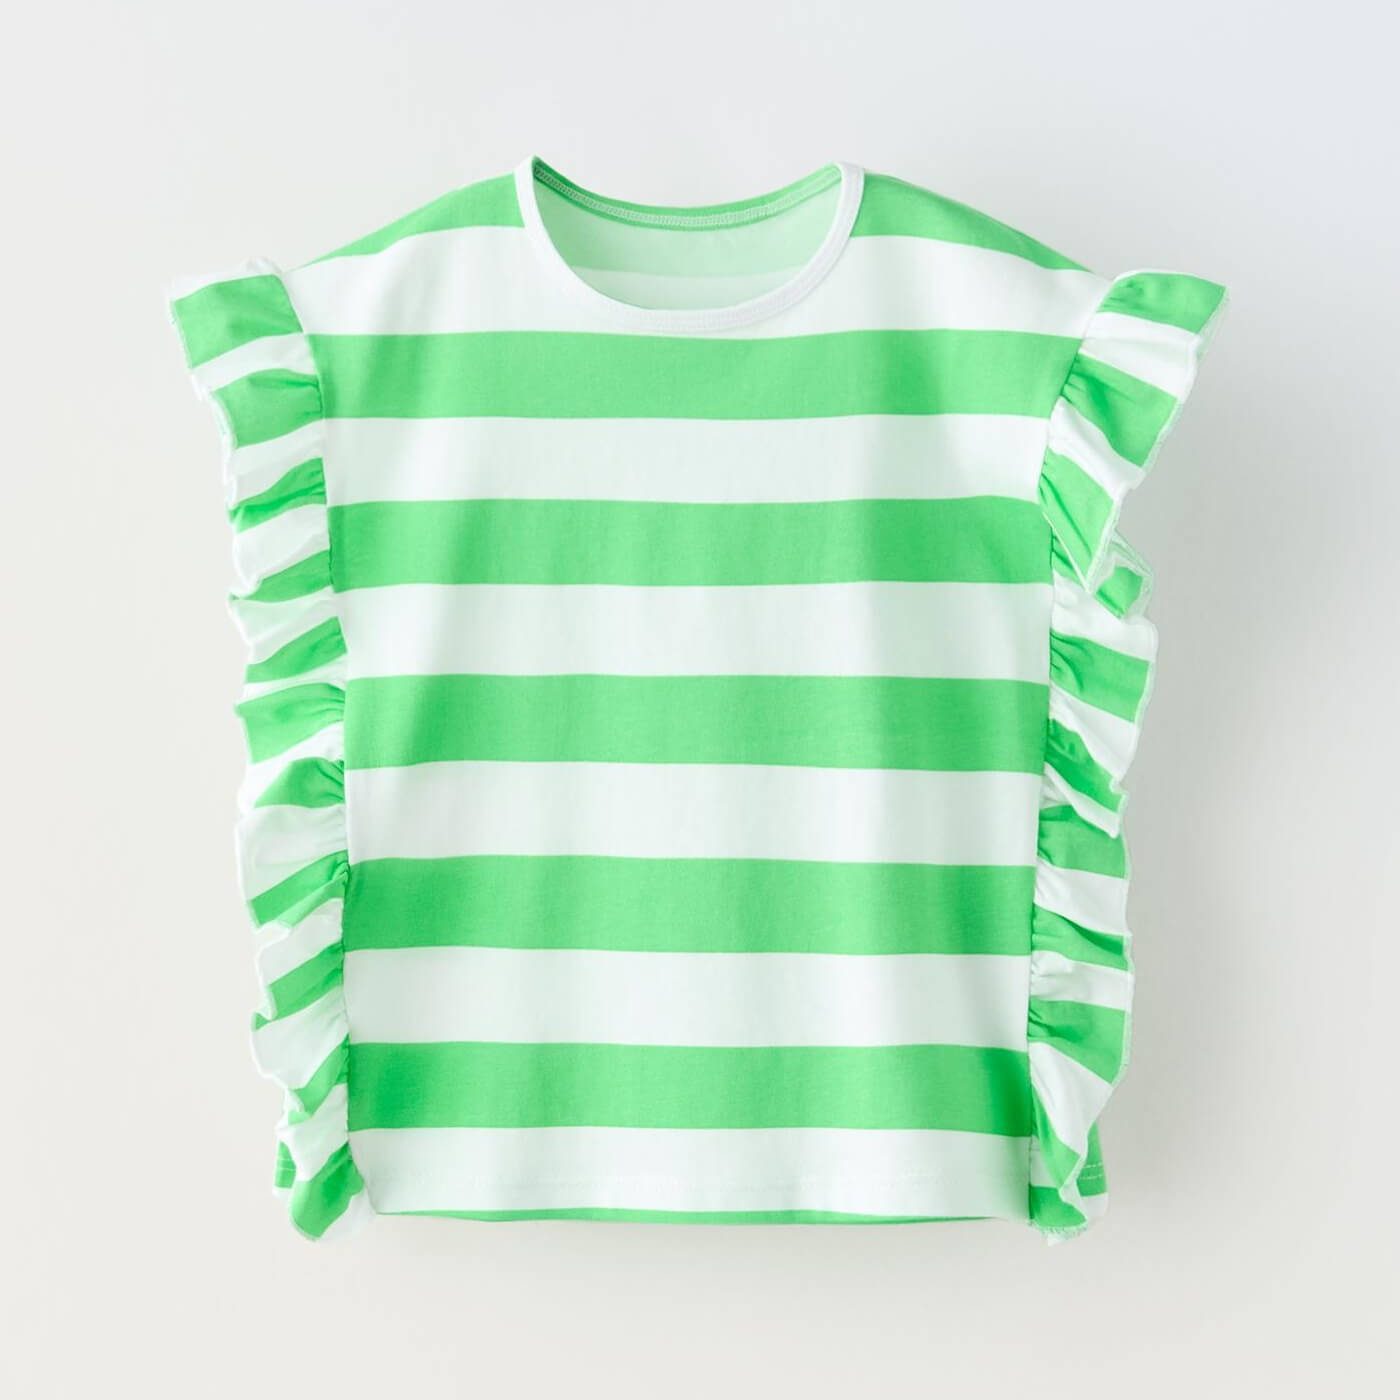 Футболка Zara Striped With Ruffle Trims, зеленый/белый футболка zara with contrast trims белый зеленый